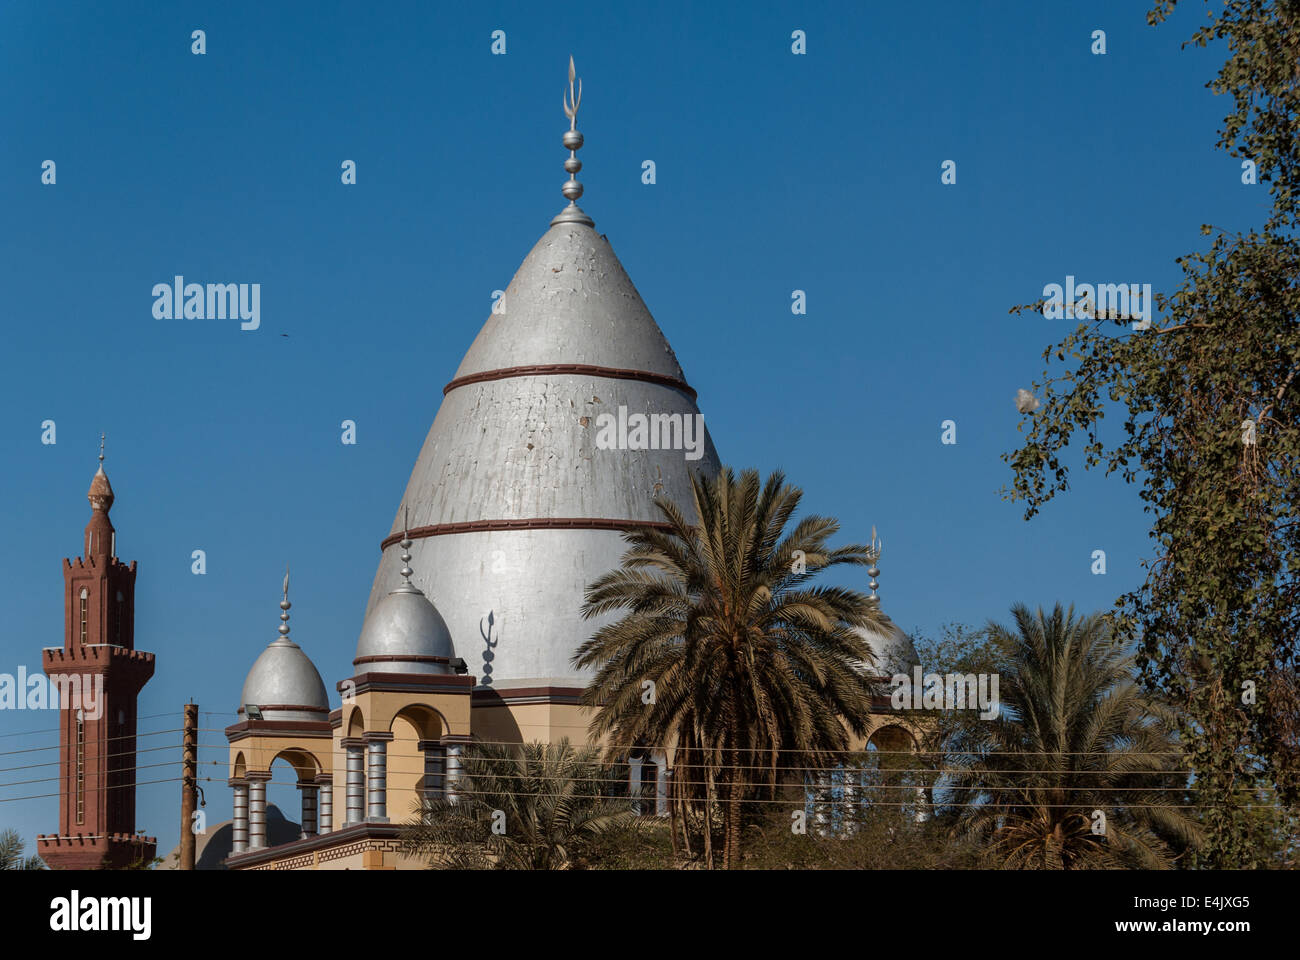 Tombe de al-Mahdi (et minaret de la mosquée Khalifa), Omdurman, au Soudan Banque D'Images